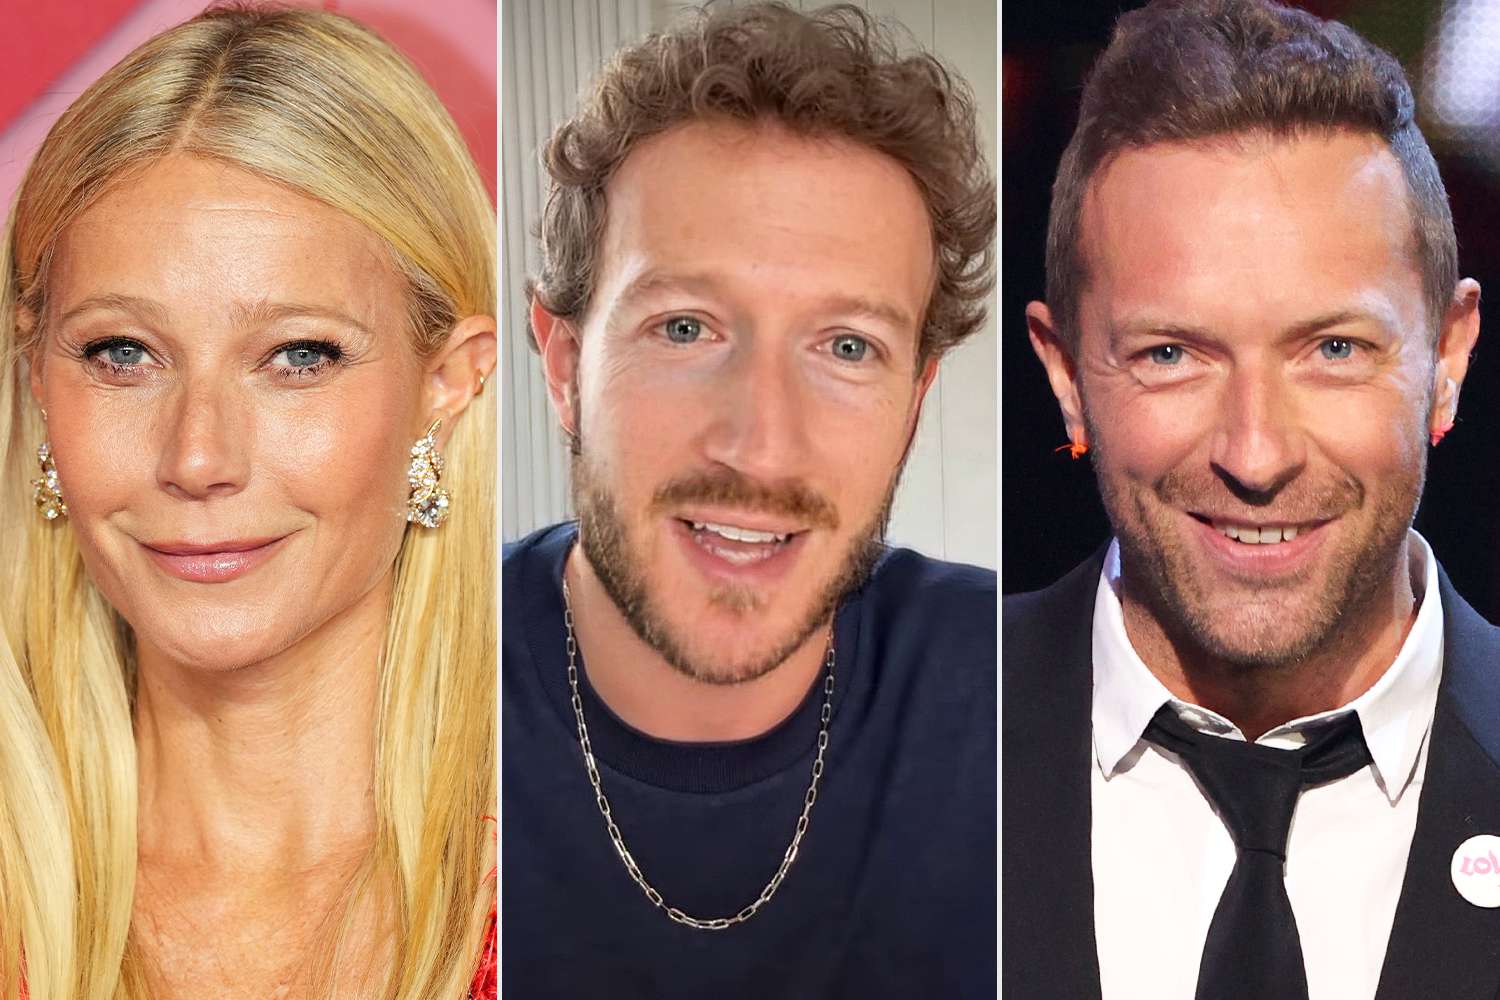 Gwyneth Paltrow Likens Mark Zuckerberg to Chris Martin in Viral Beard Photo: 'Looks Like My Ex Hubs'